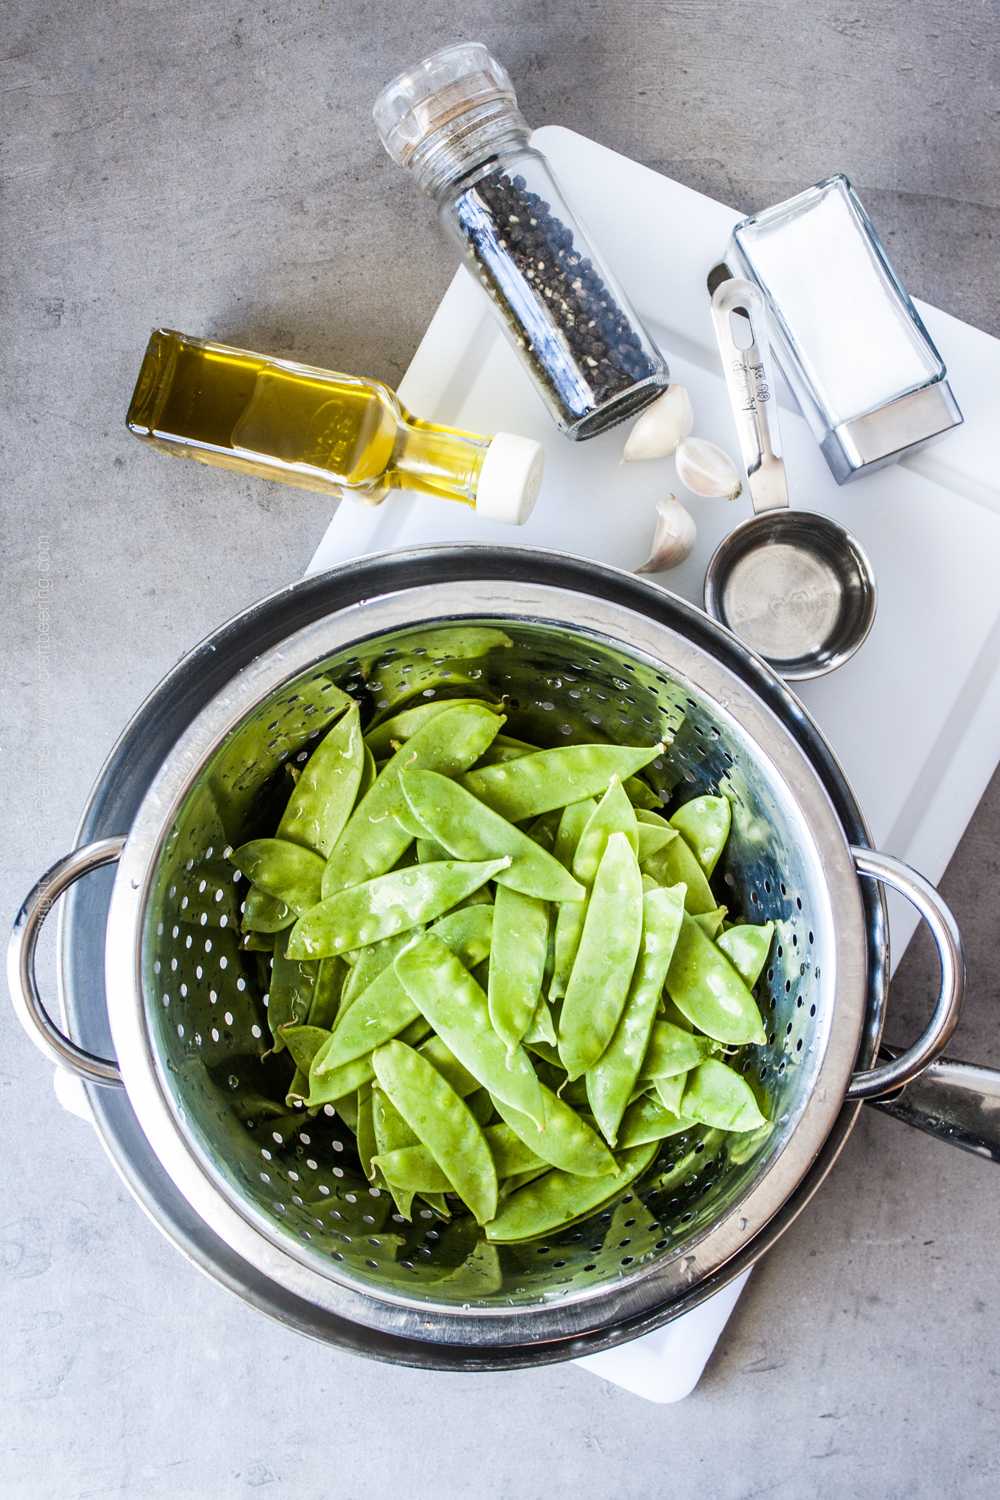 Ingredients for snow peas recipe in skillet